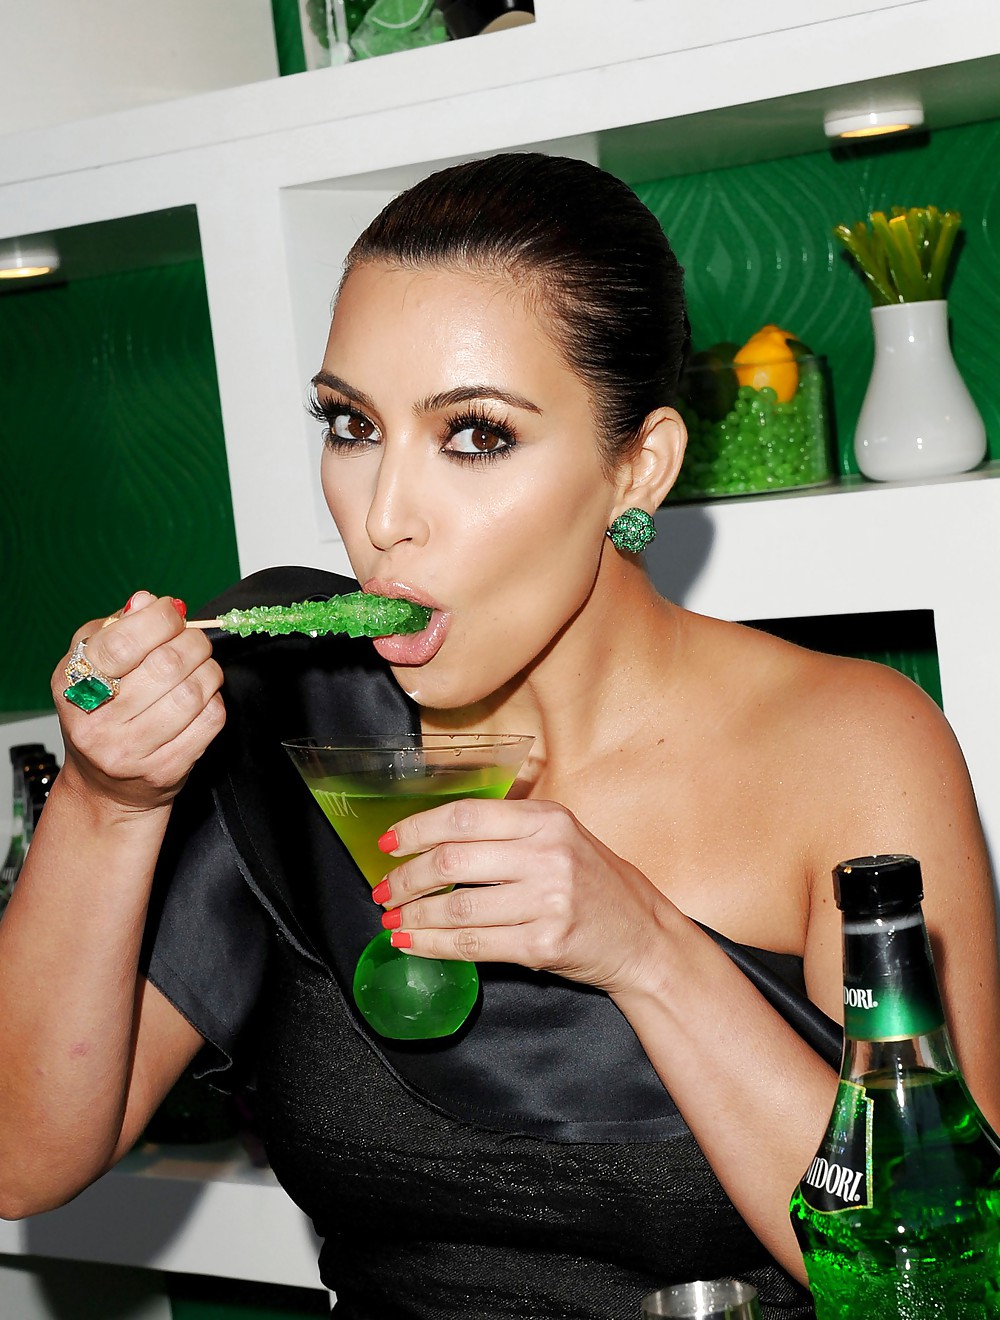 Kim Kardashian Midori Liqueur De Melon Tronc Spectacle #3767296